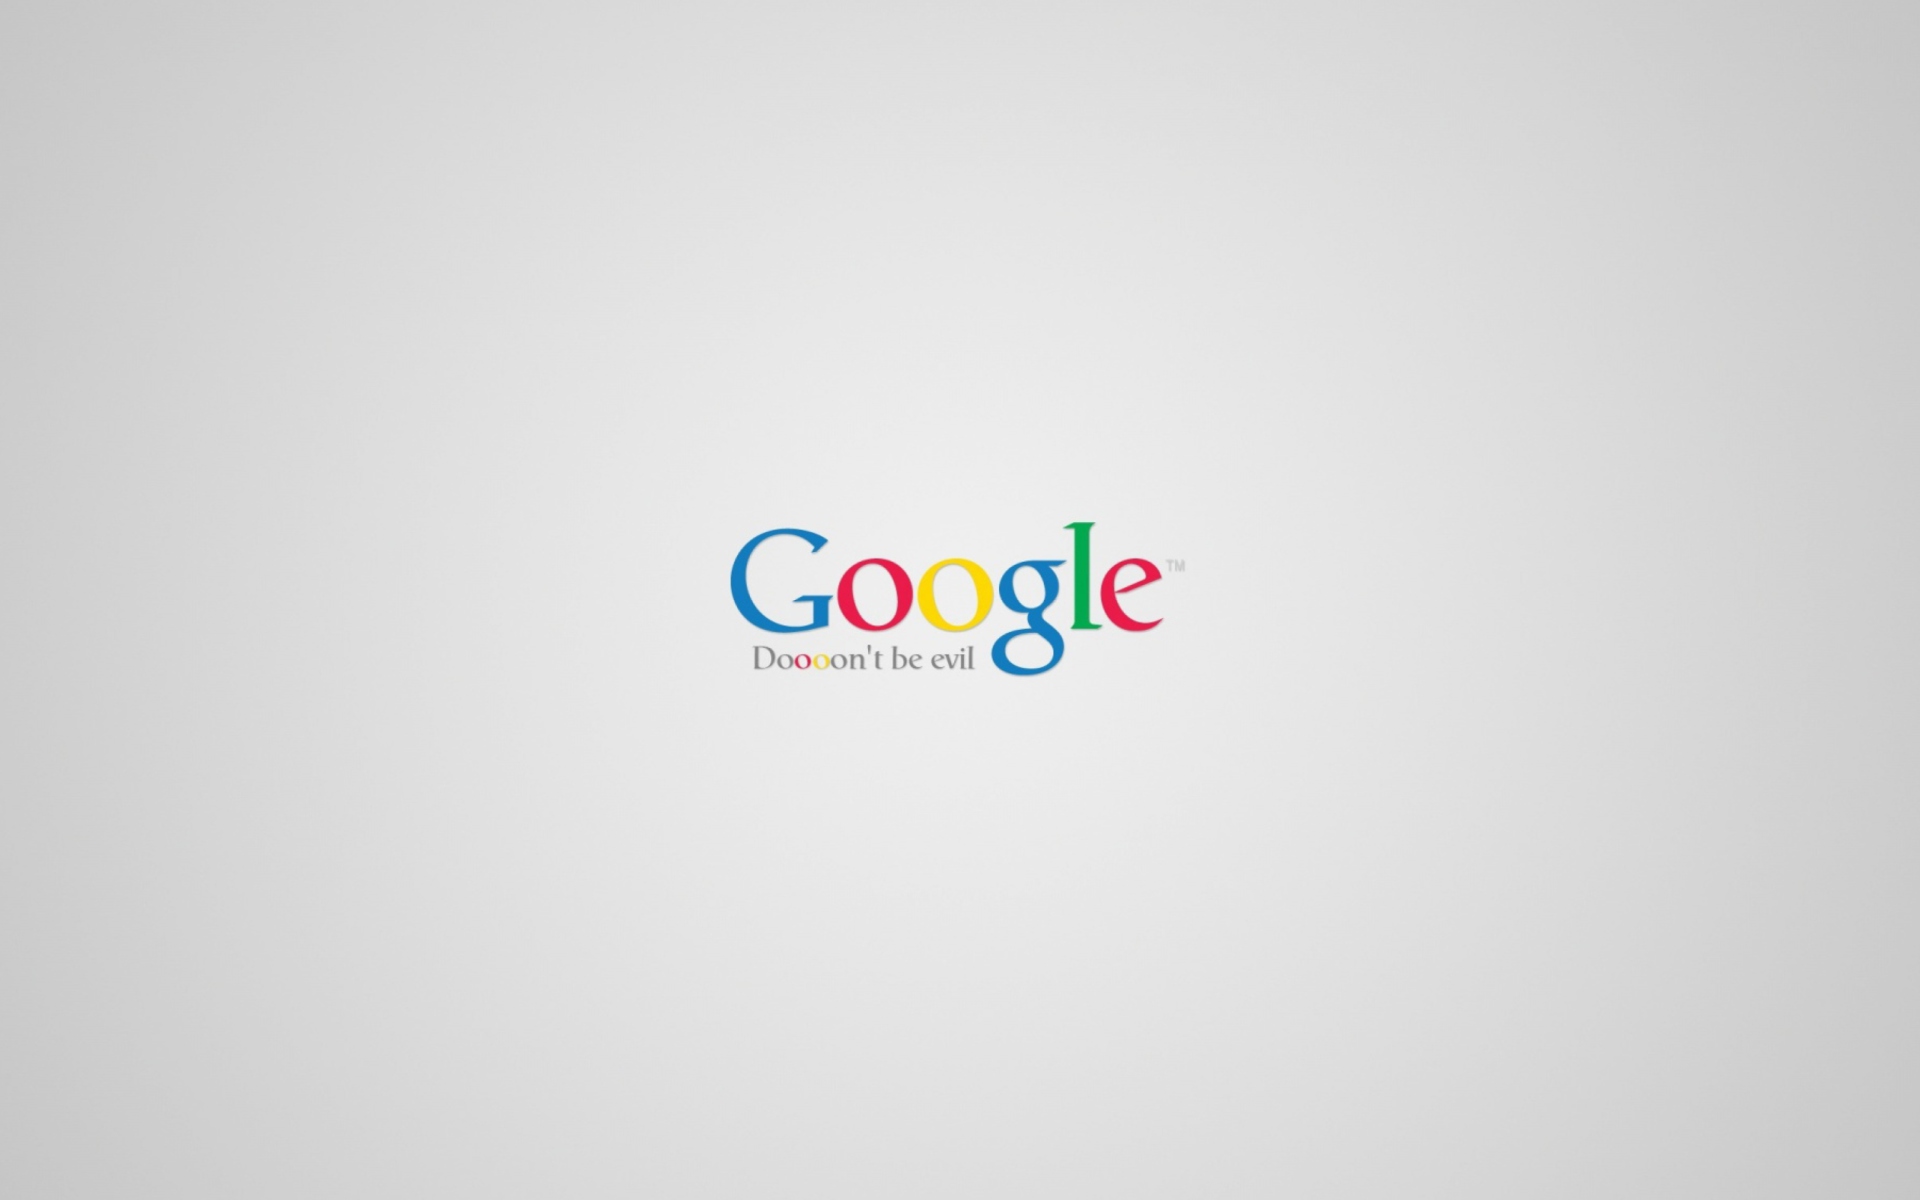 Google - Don't be evil wallpaper 1920x1200